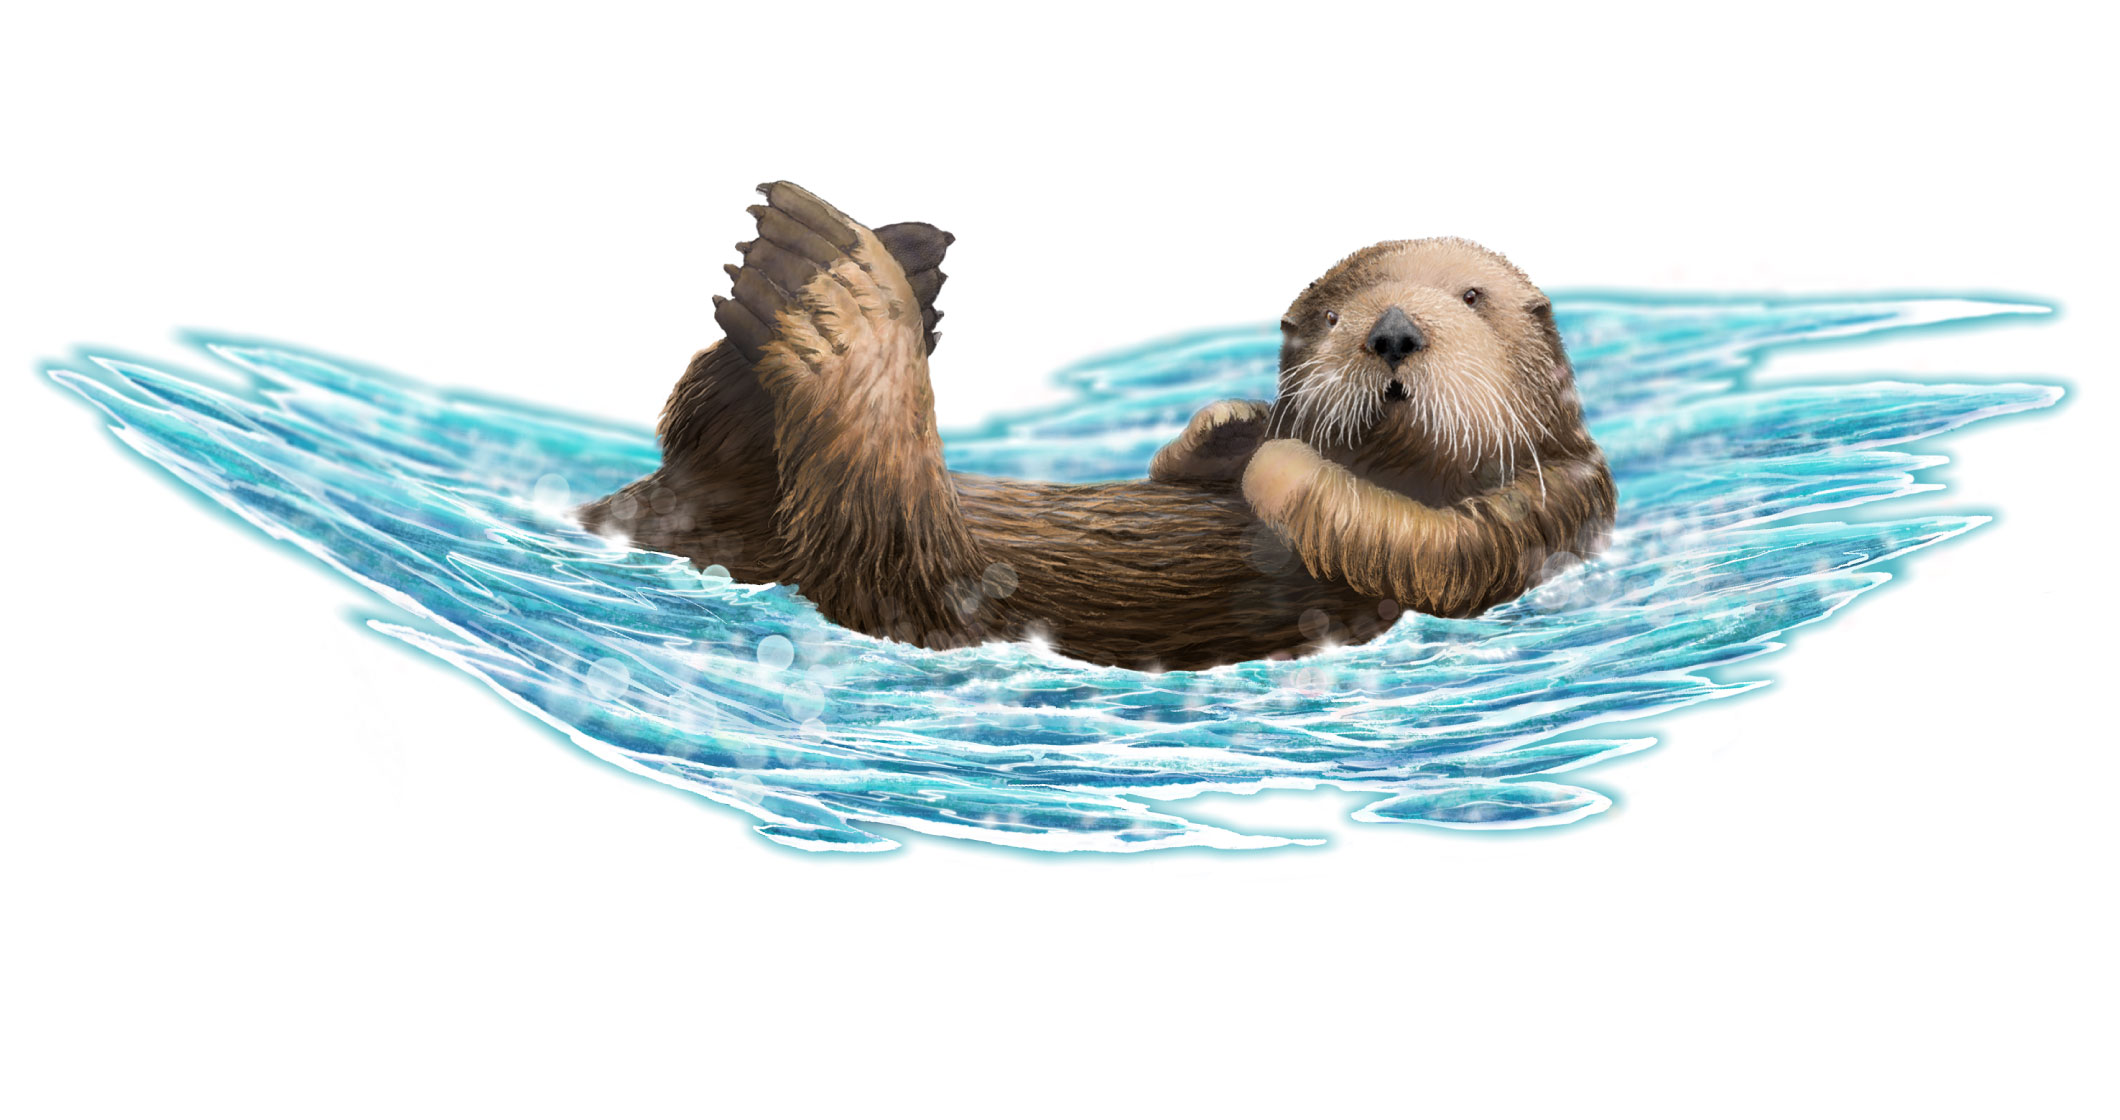 Sea otter illustration